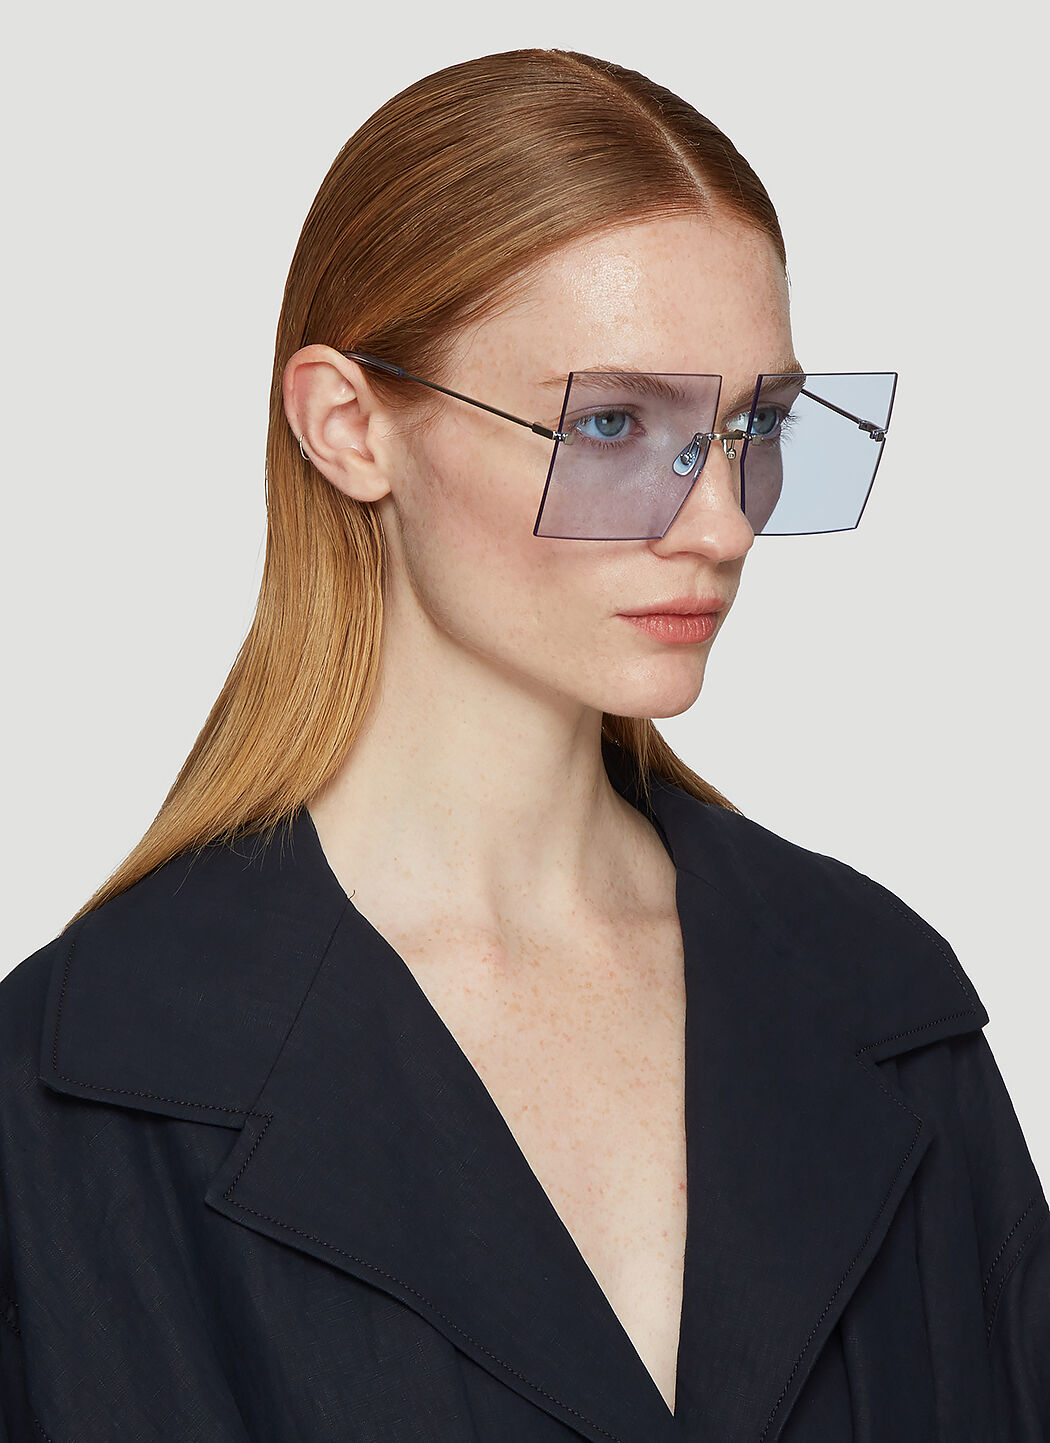 Le Specs Karen Walker KUBORAUM BERLIN buy shop online rainbow trend 2020 sunglasses fashion runway shopping